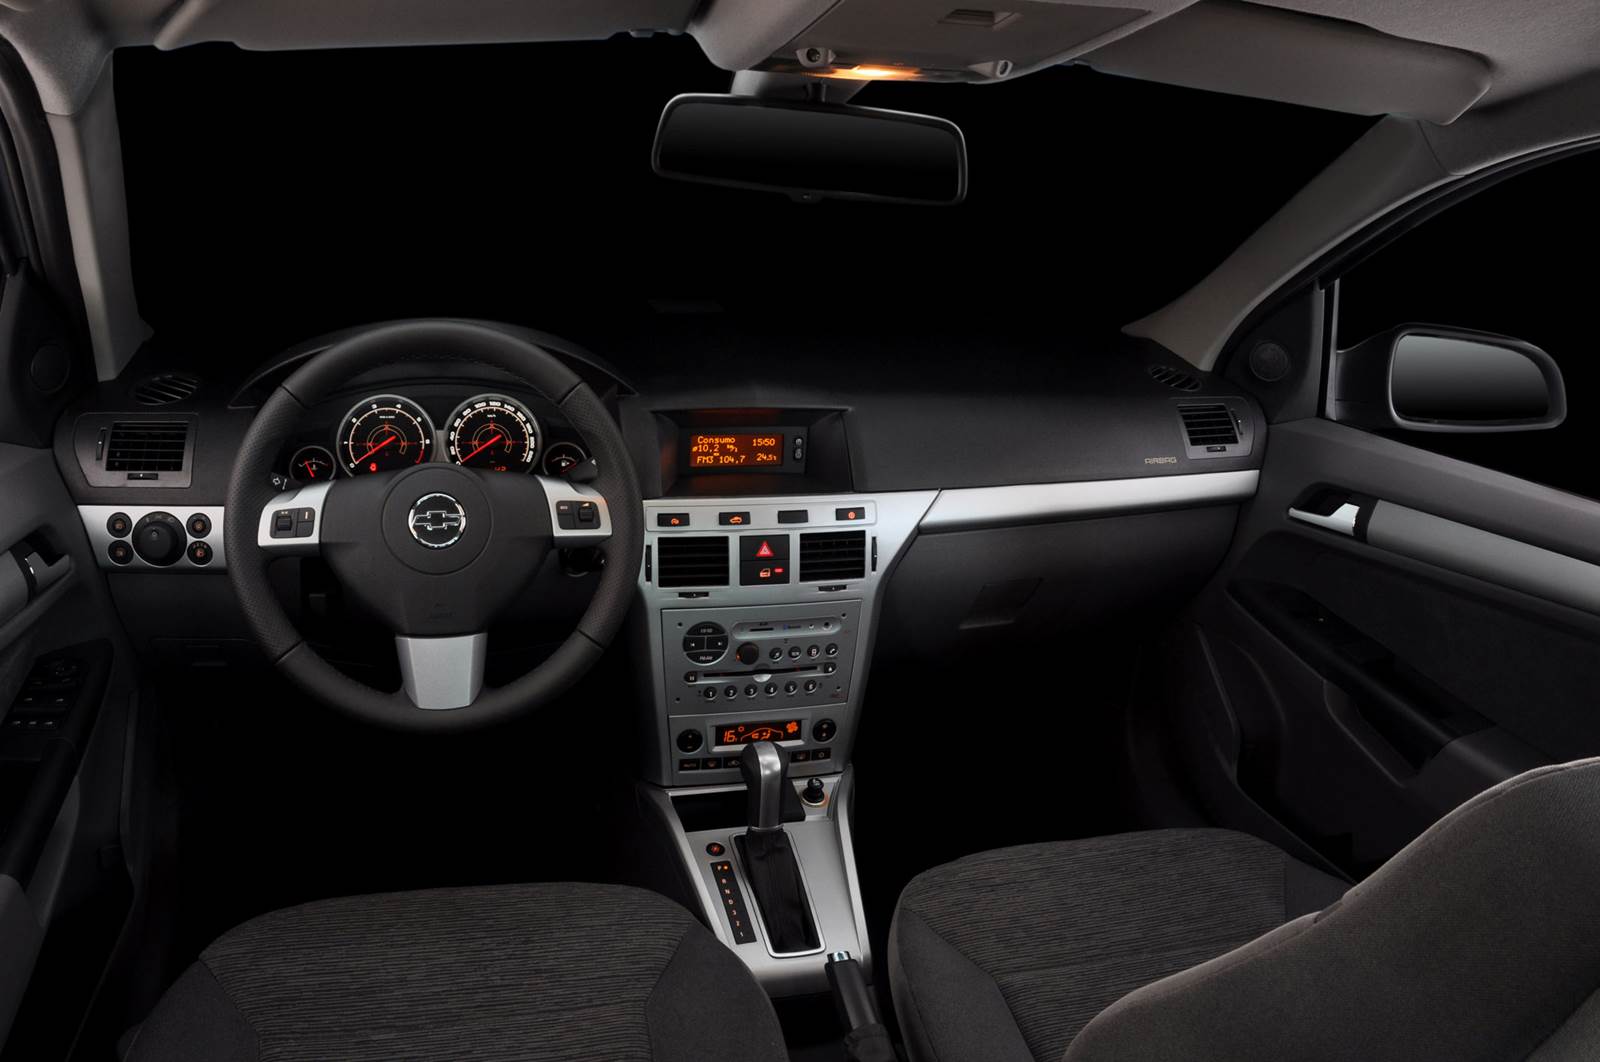 Chevrolet Vectra 2011 - interior